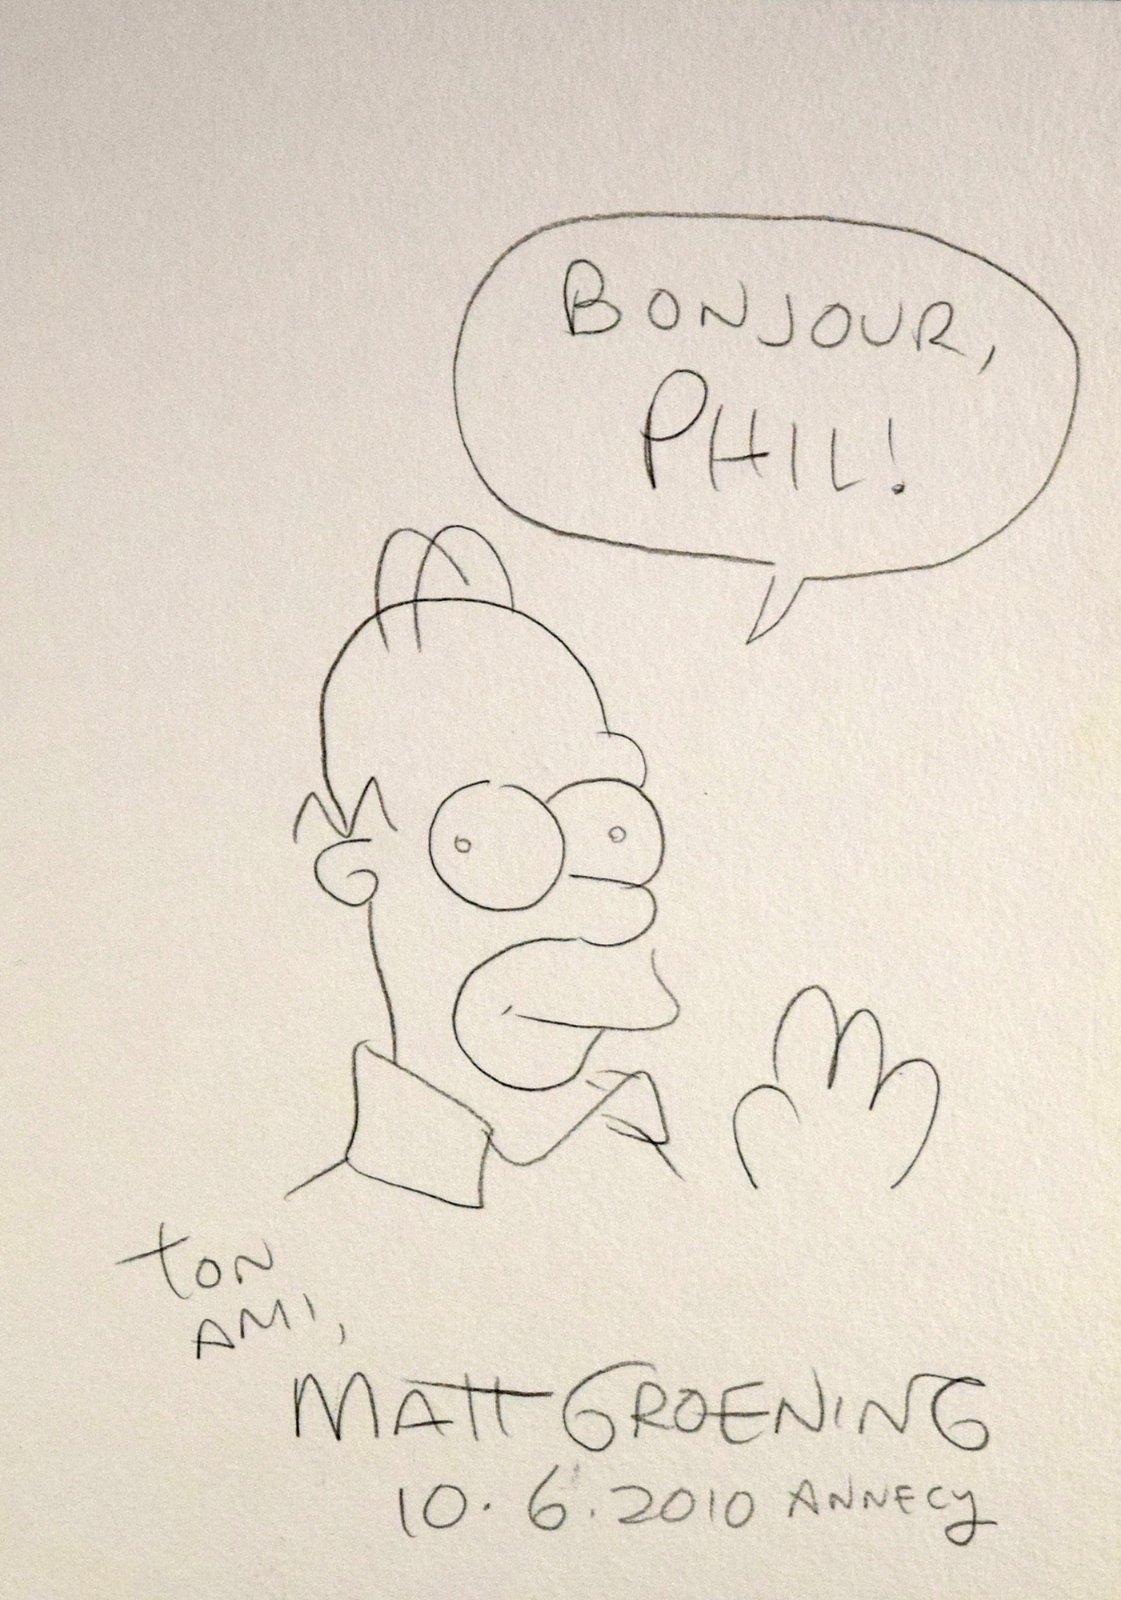 LES SIMPSON by Matt Groening, 2010